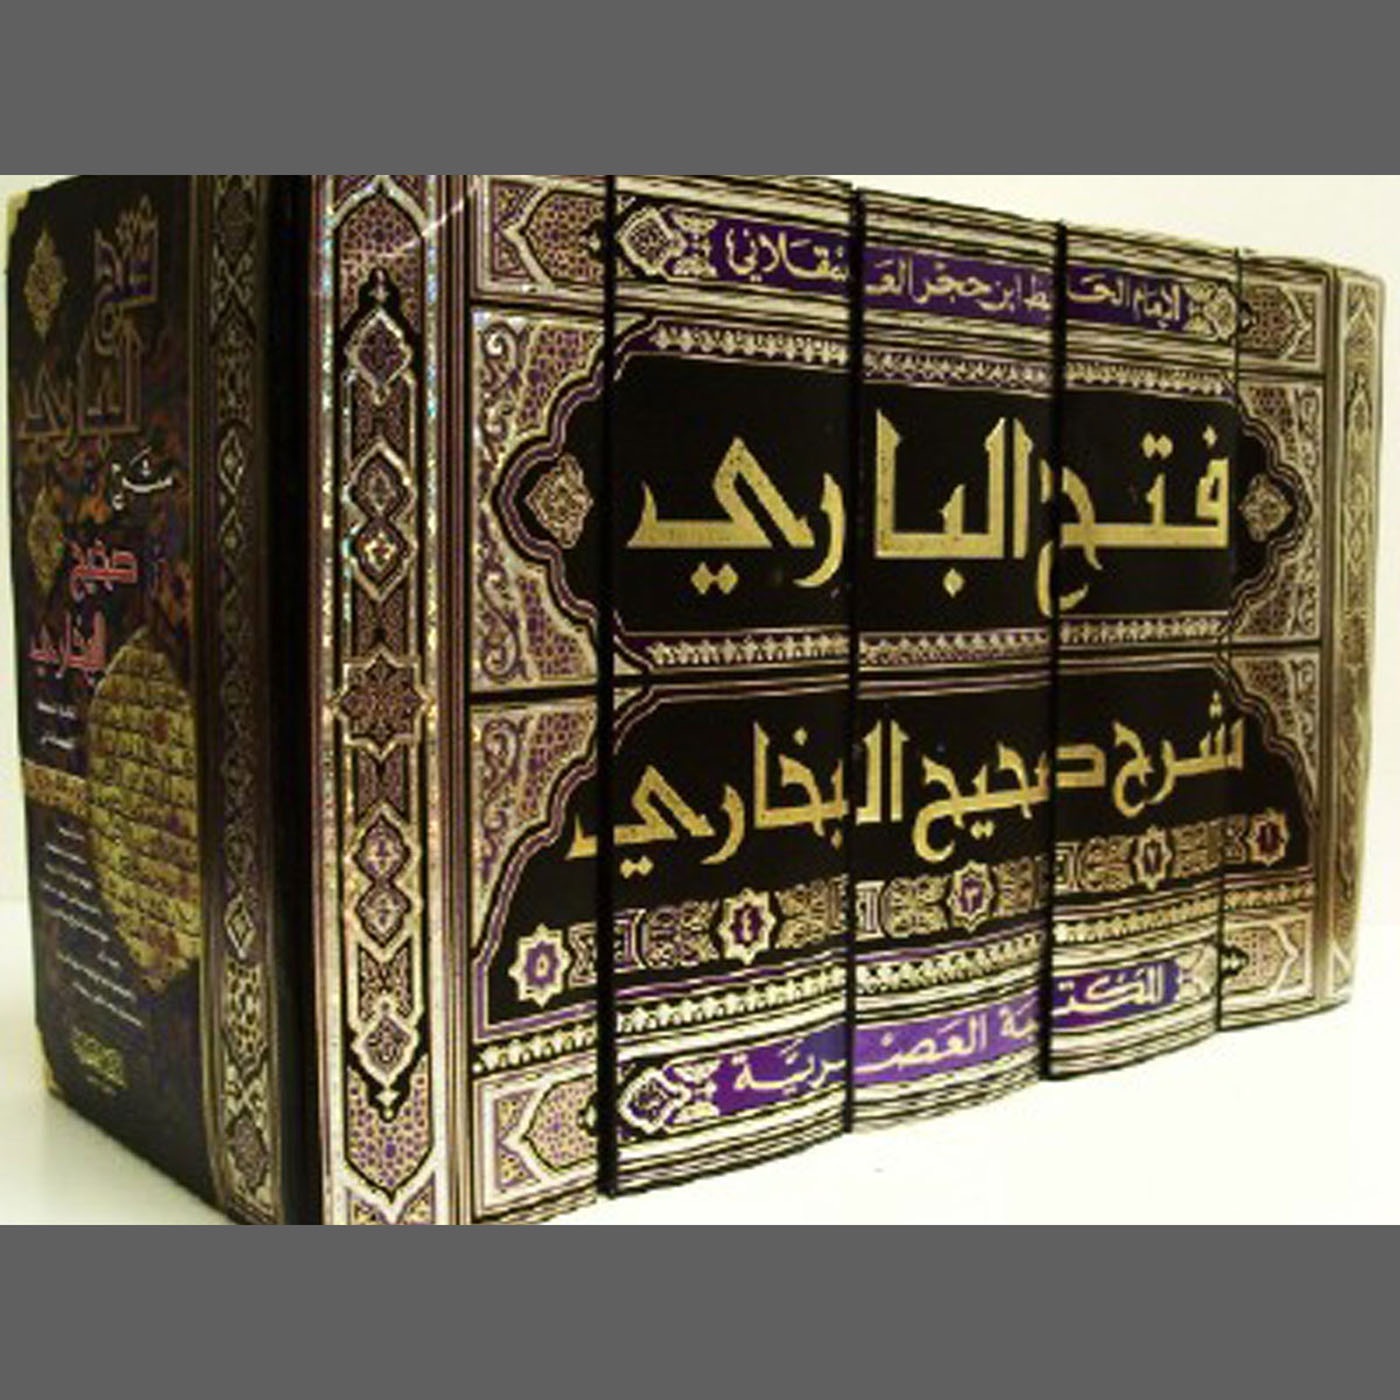 Ас сахих аль. Имам Аль Бухари хадисы. Сборник Сахих Аль Бухари. Бухари Сахих Аль-Бухари хадис.